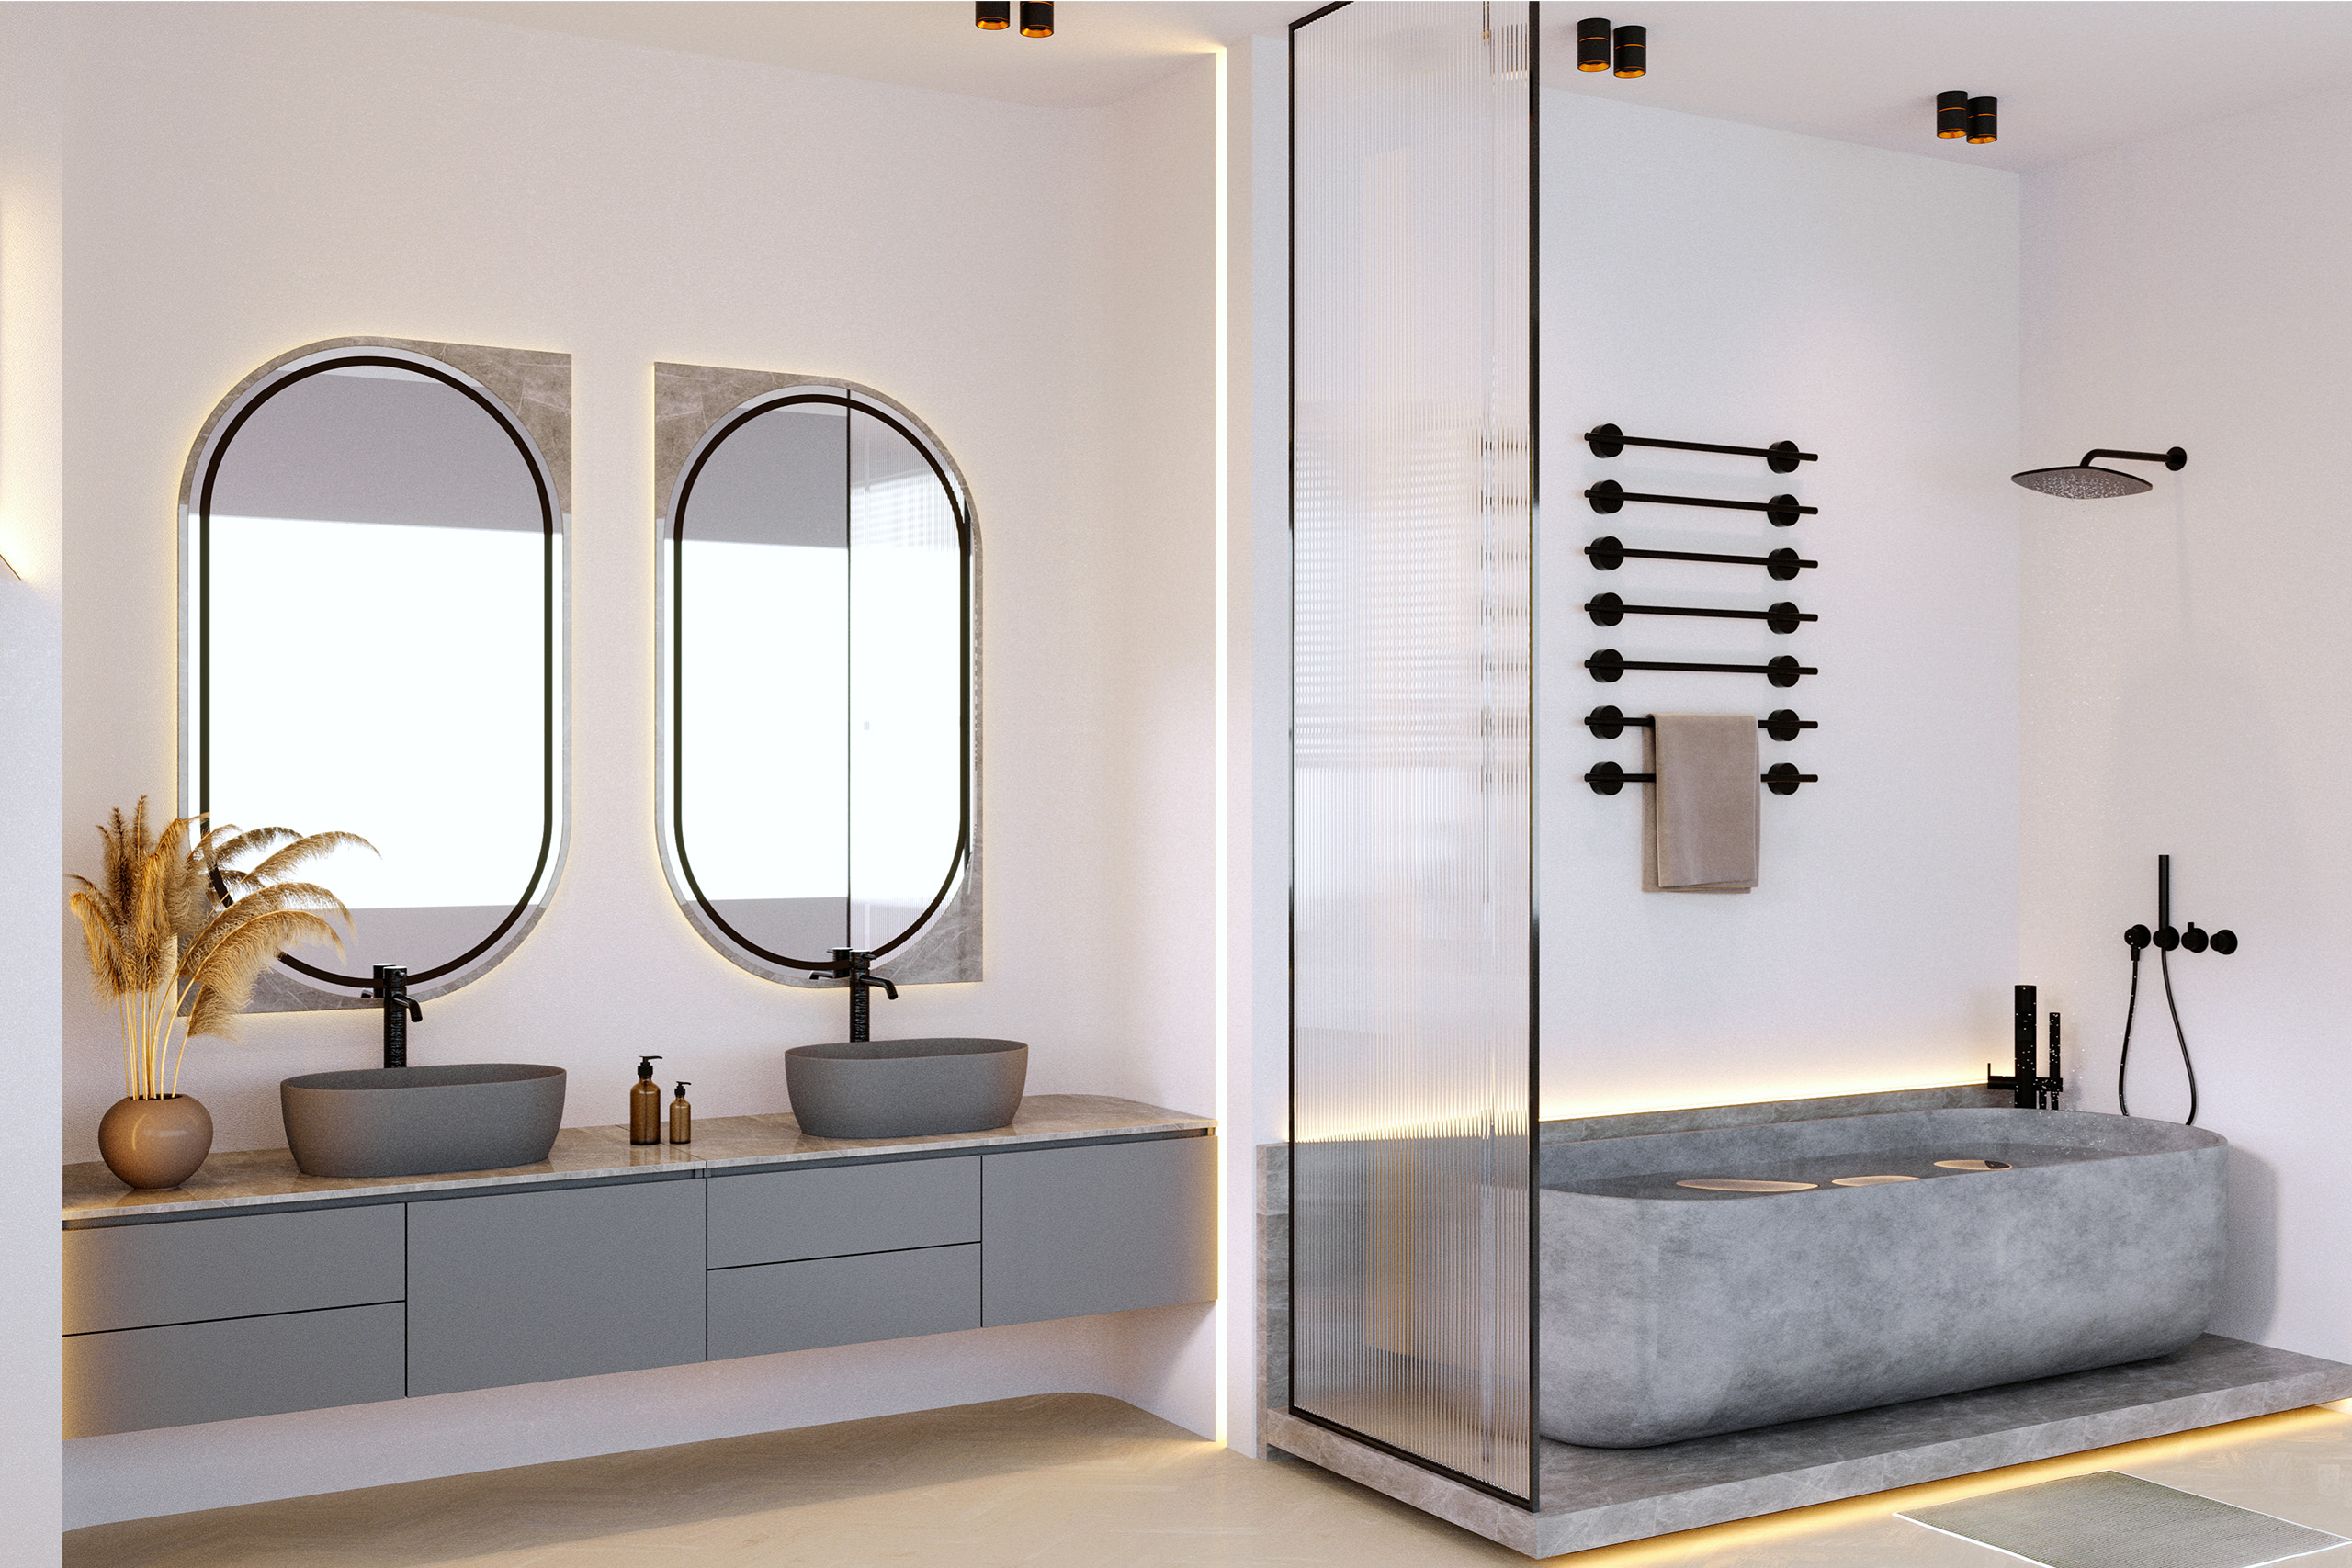 3d rendering3d illustration interior scene mockupluxury hotel bathroom with two washbasins gray stone bathtub zone